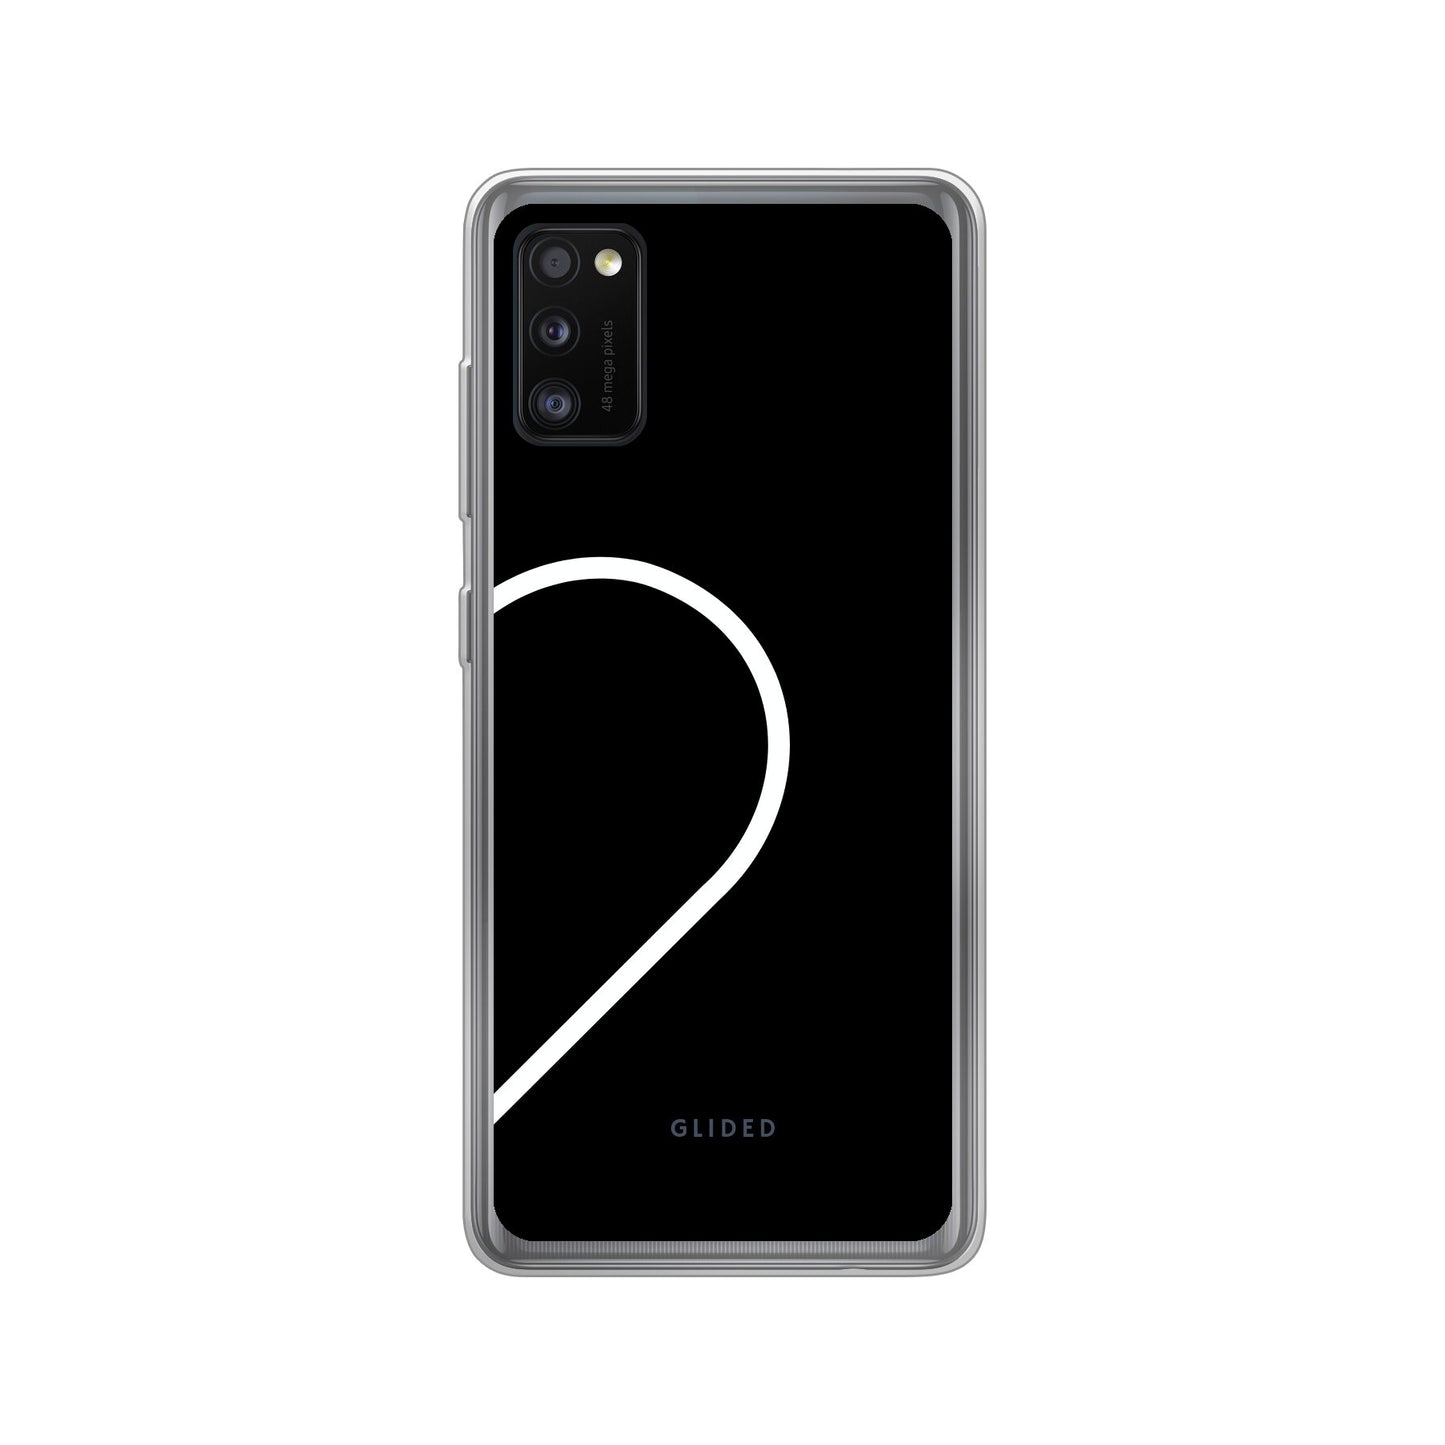 Harmony Black - Samsung Galaxy A41 Handyhülle Soft case